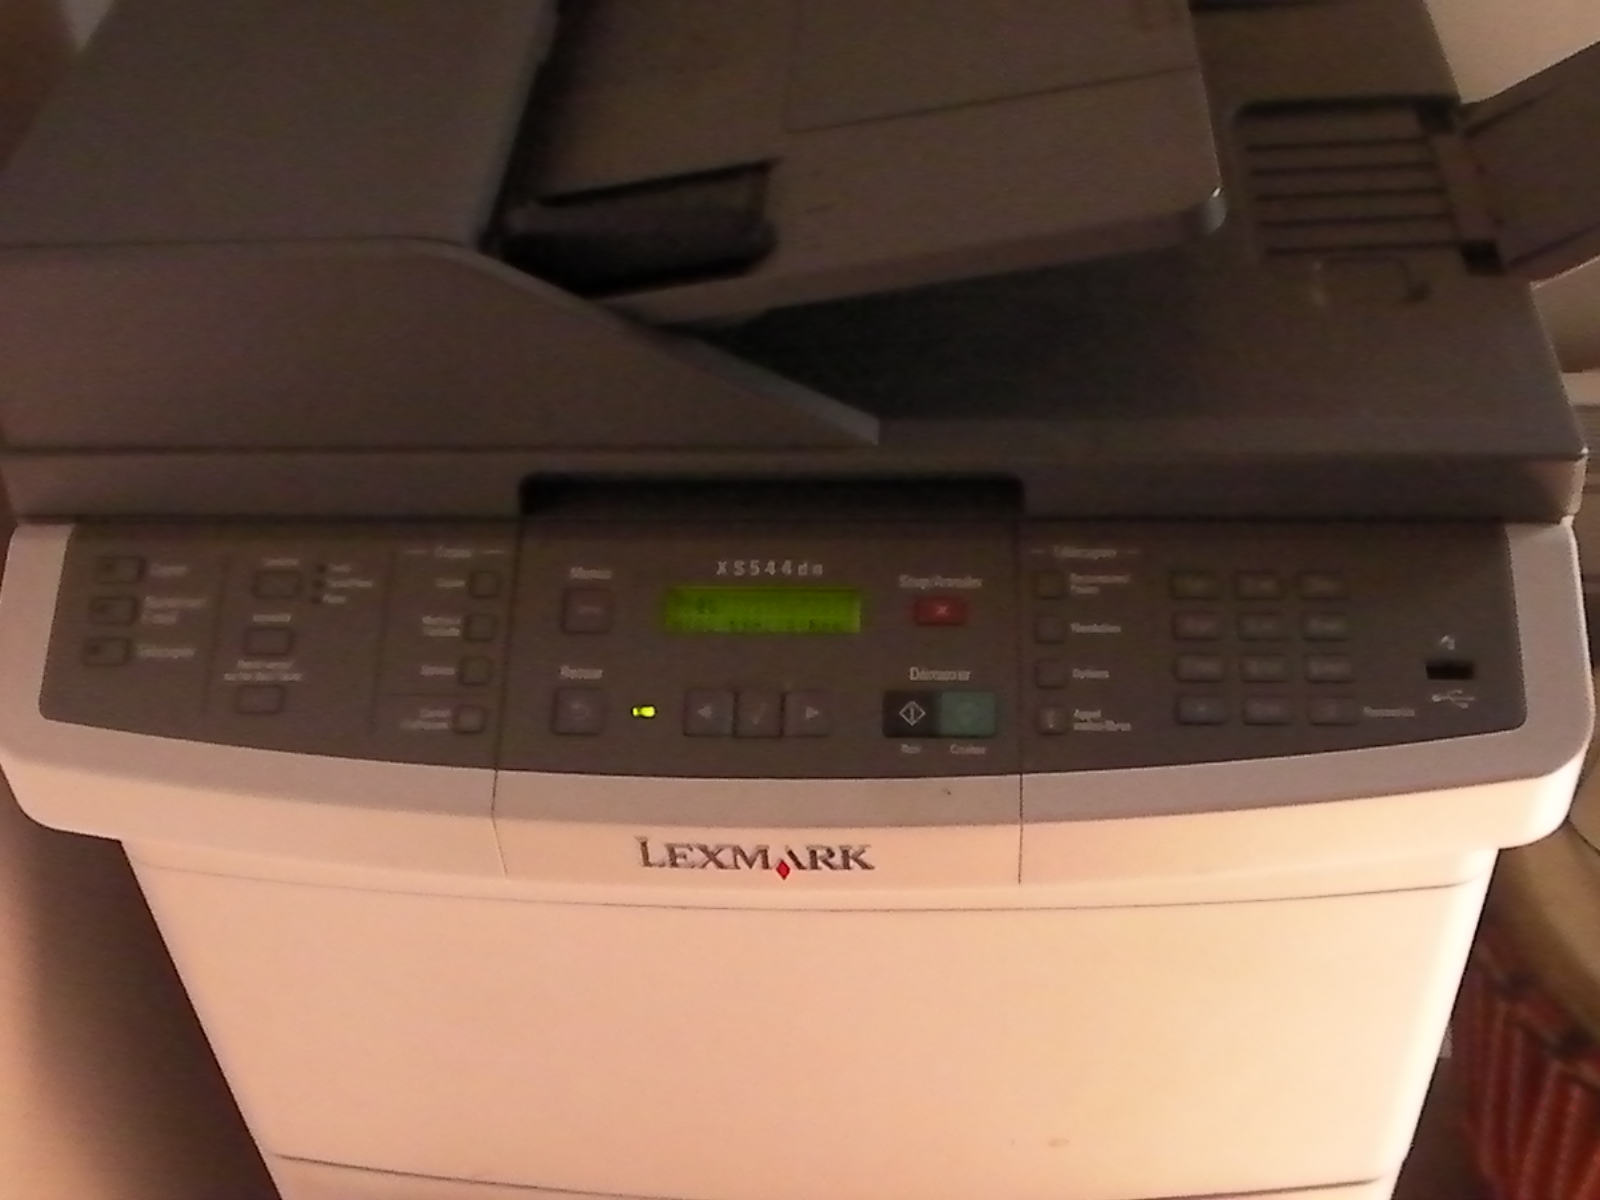 imprimante multifonction Lexmark XS544dn